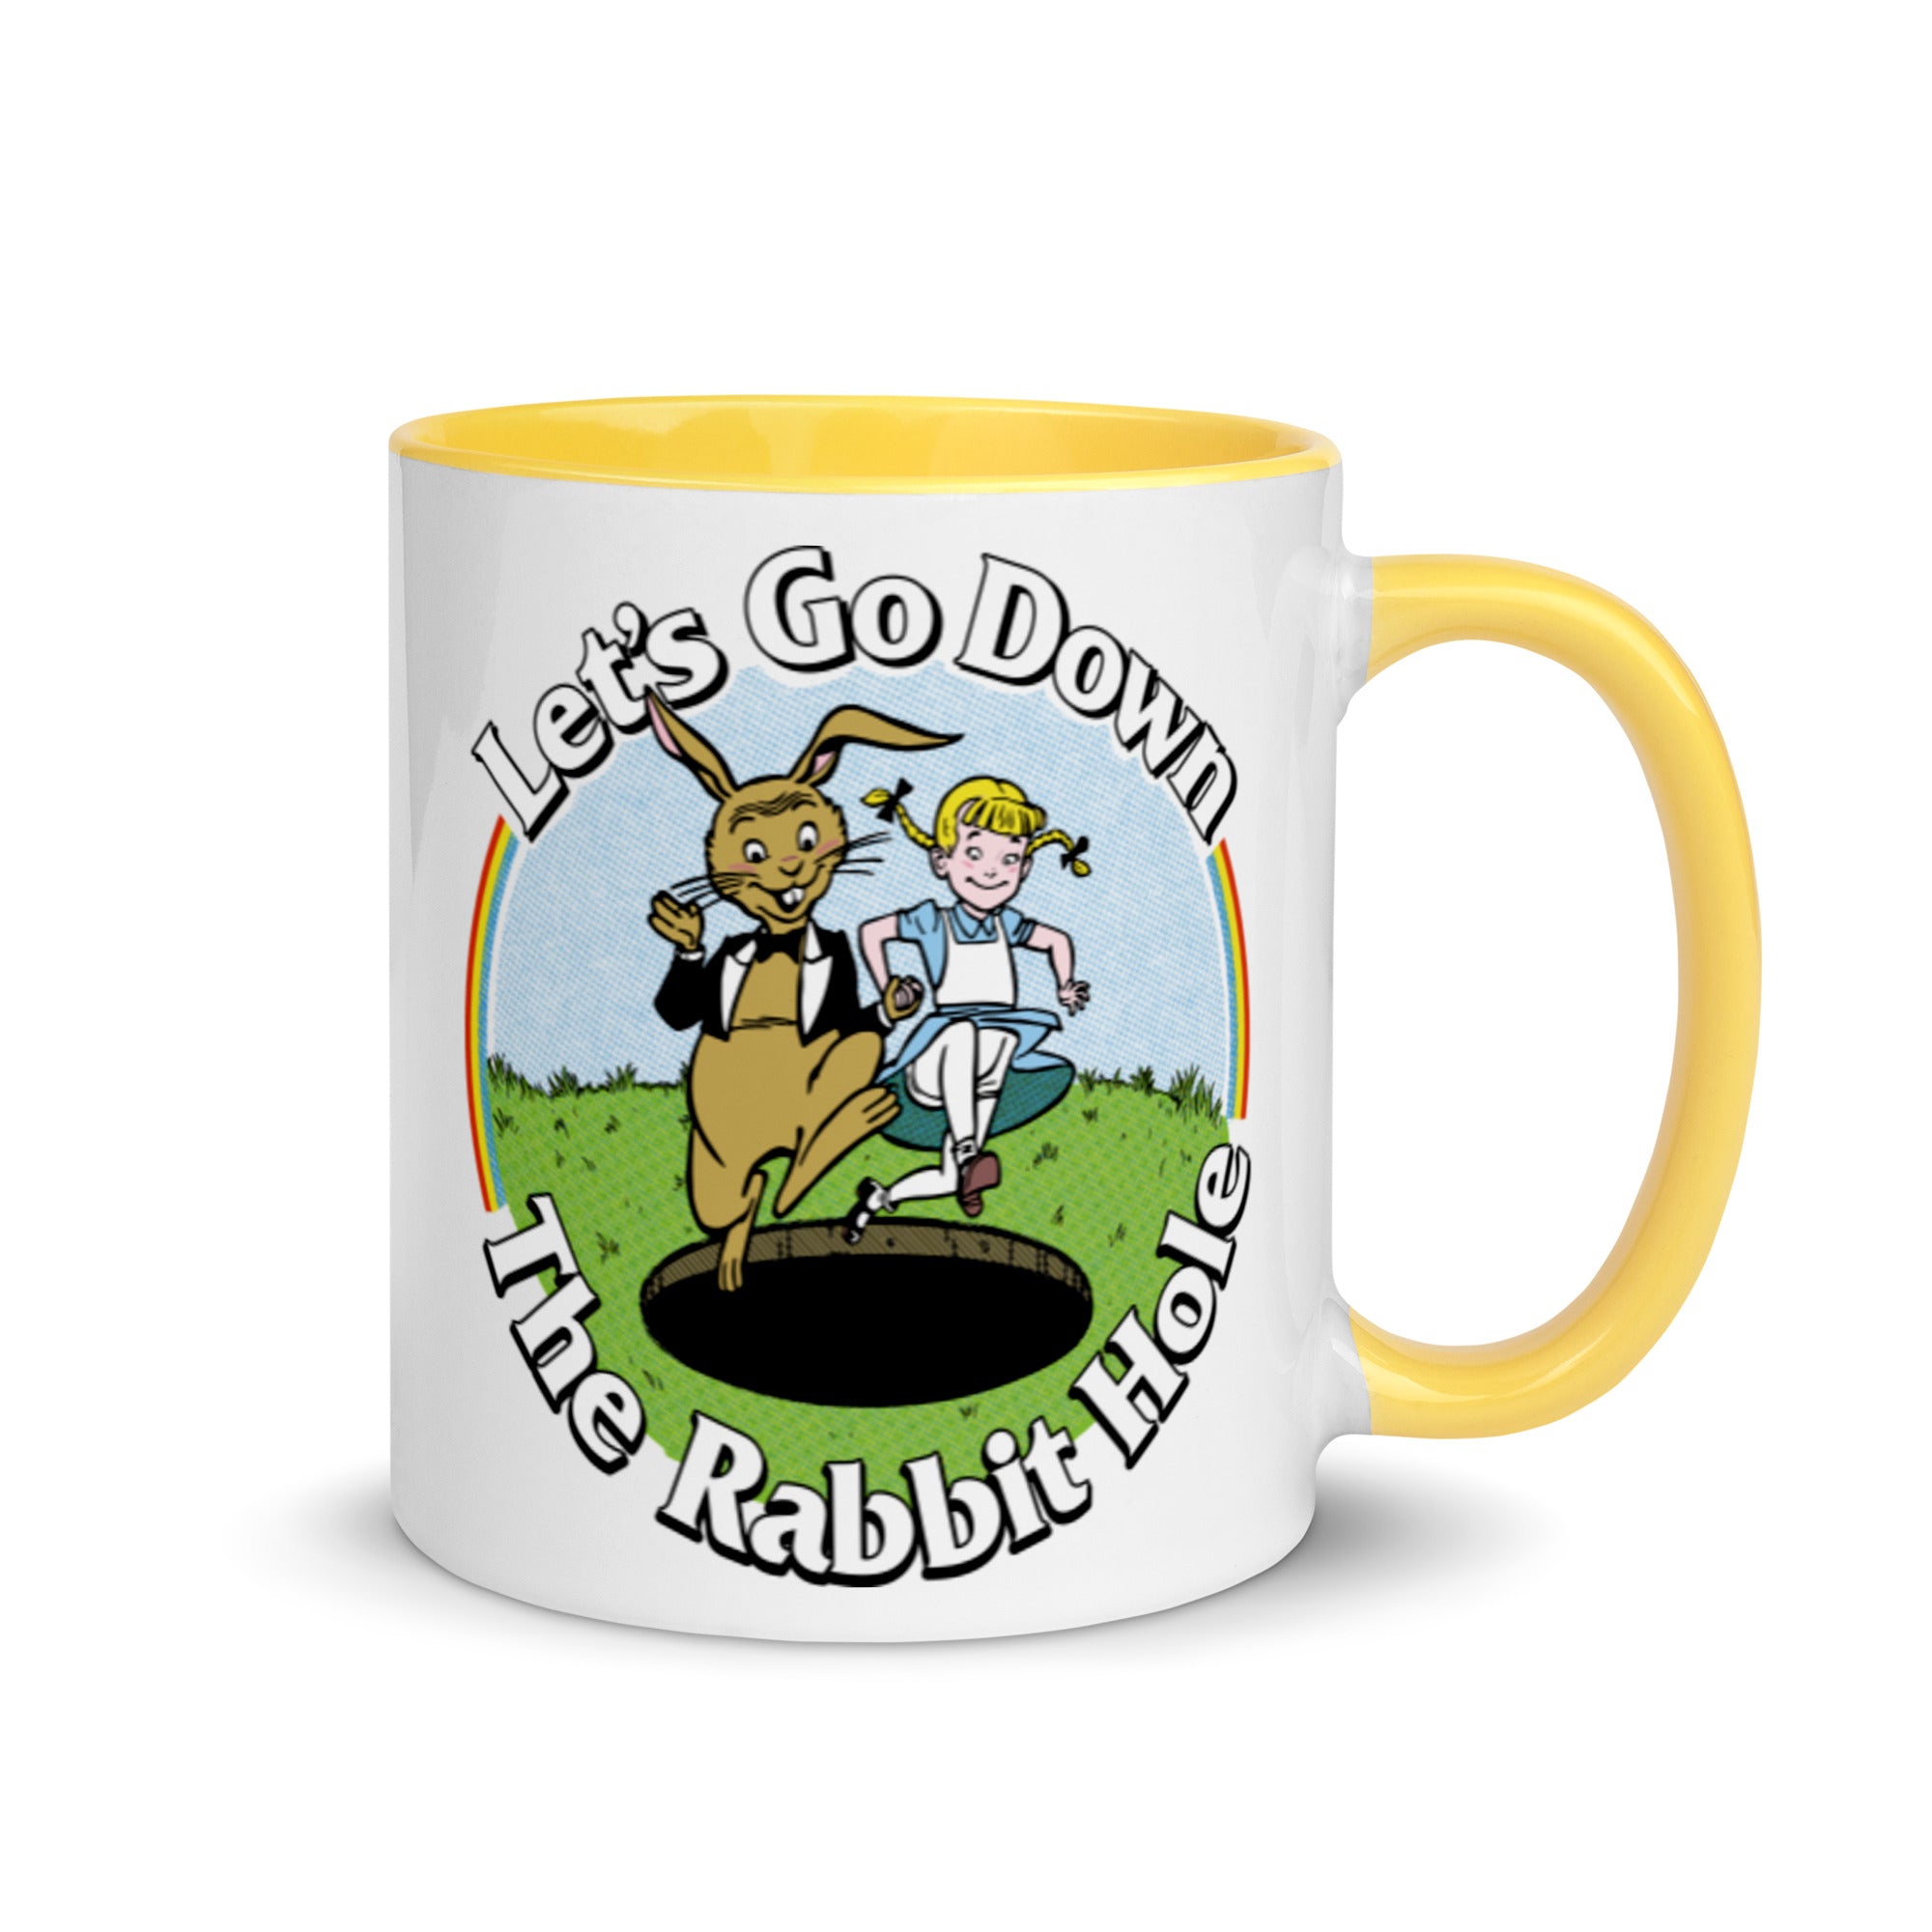 Let's Go Down the Rabbit Hole Coffee Mug